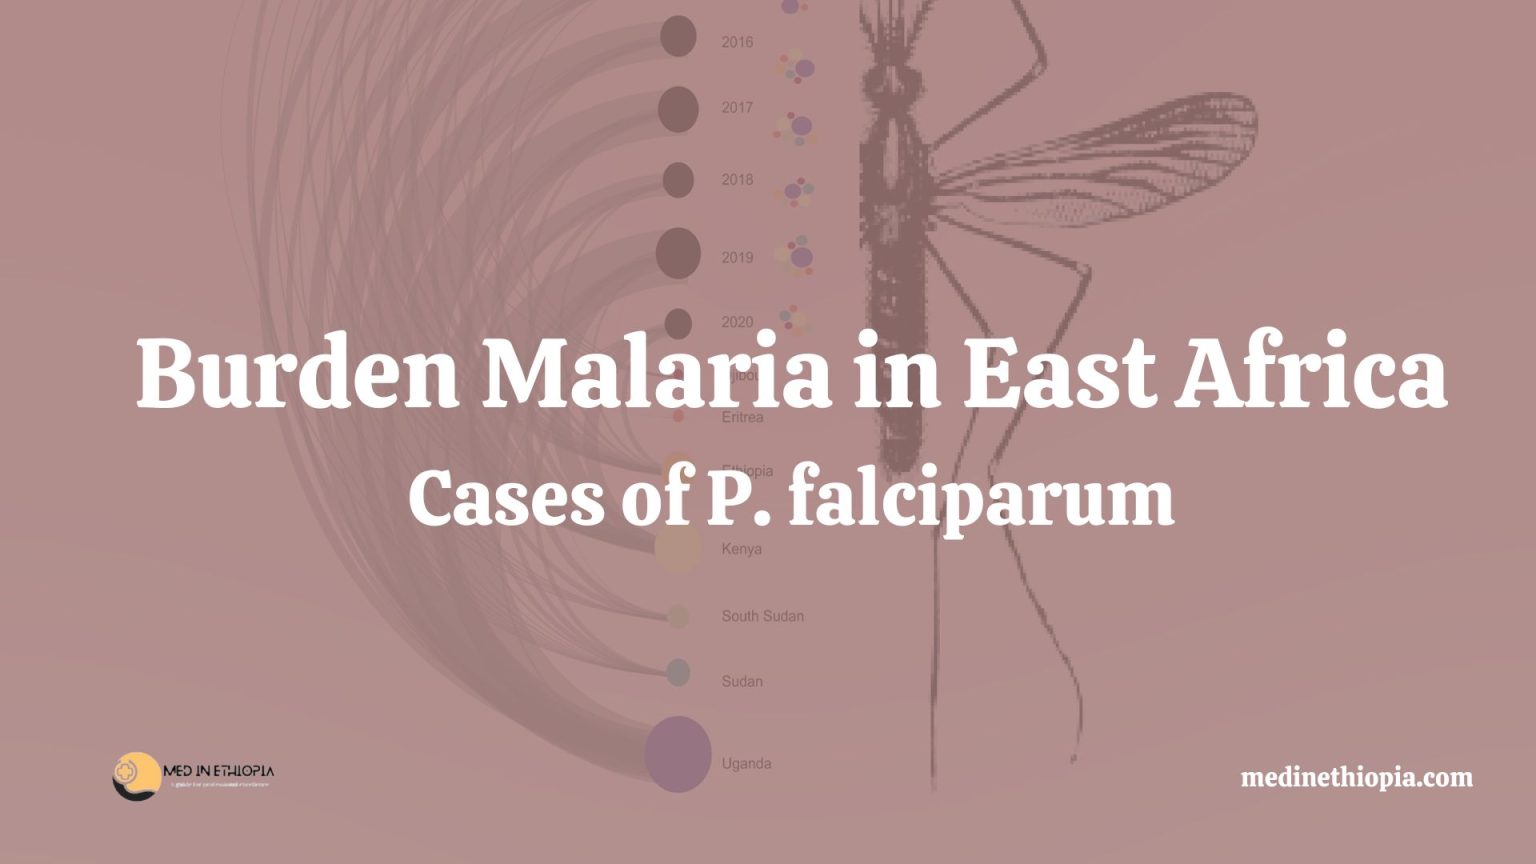 Burden Malaria in East Africa